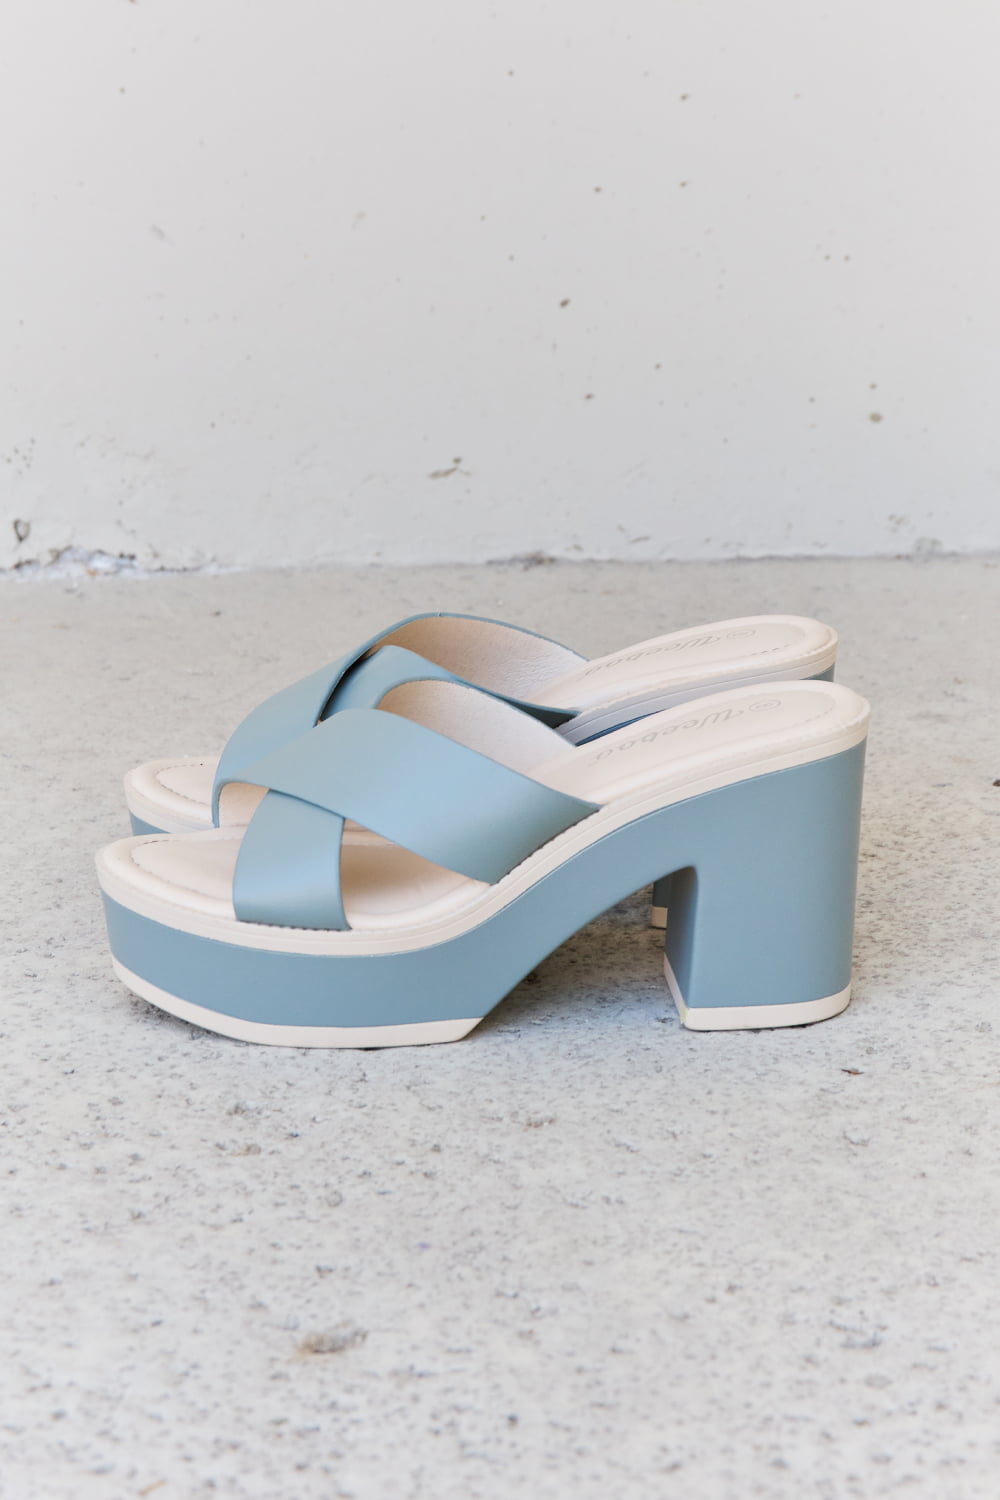 Cherish The Moments Contrast Platform Sandals in Misty Blue